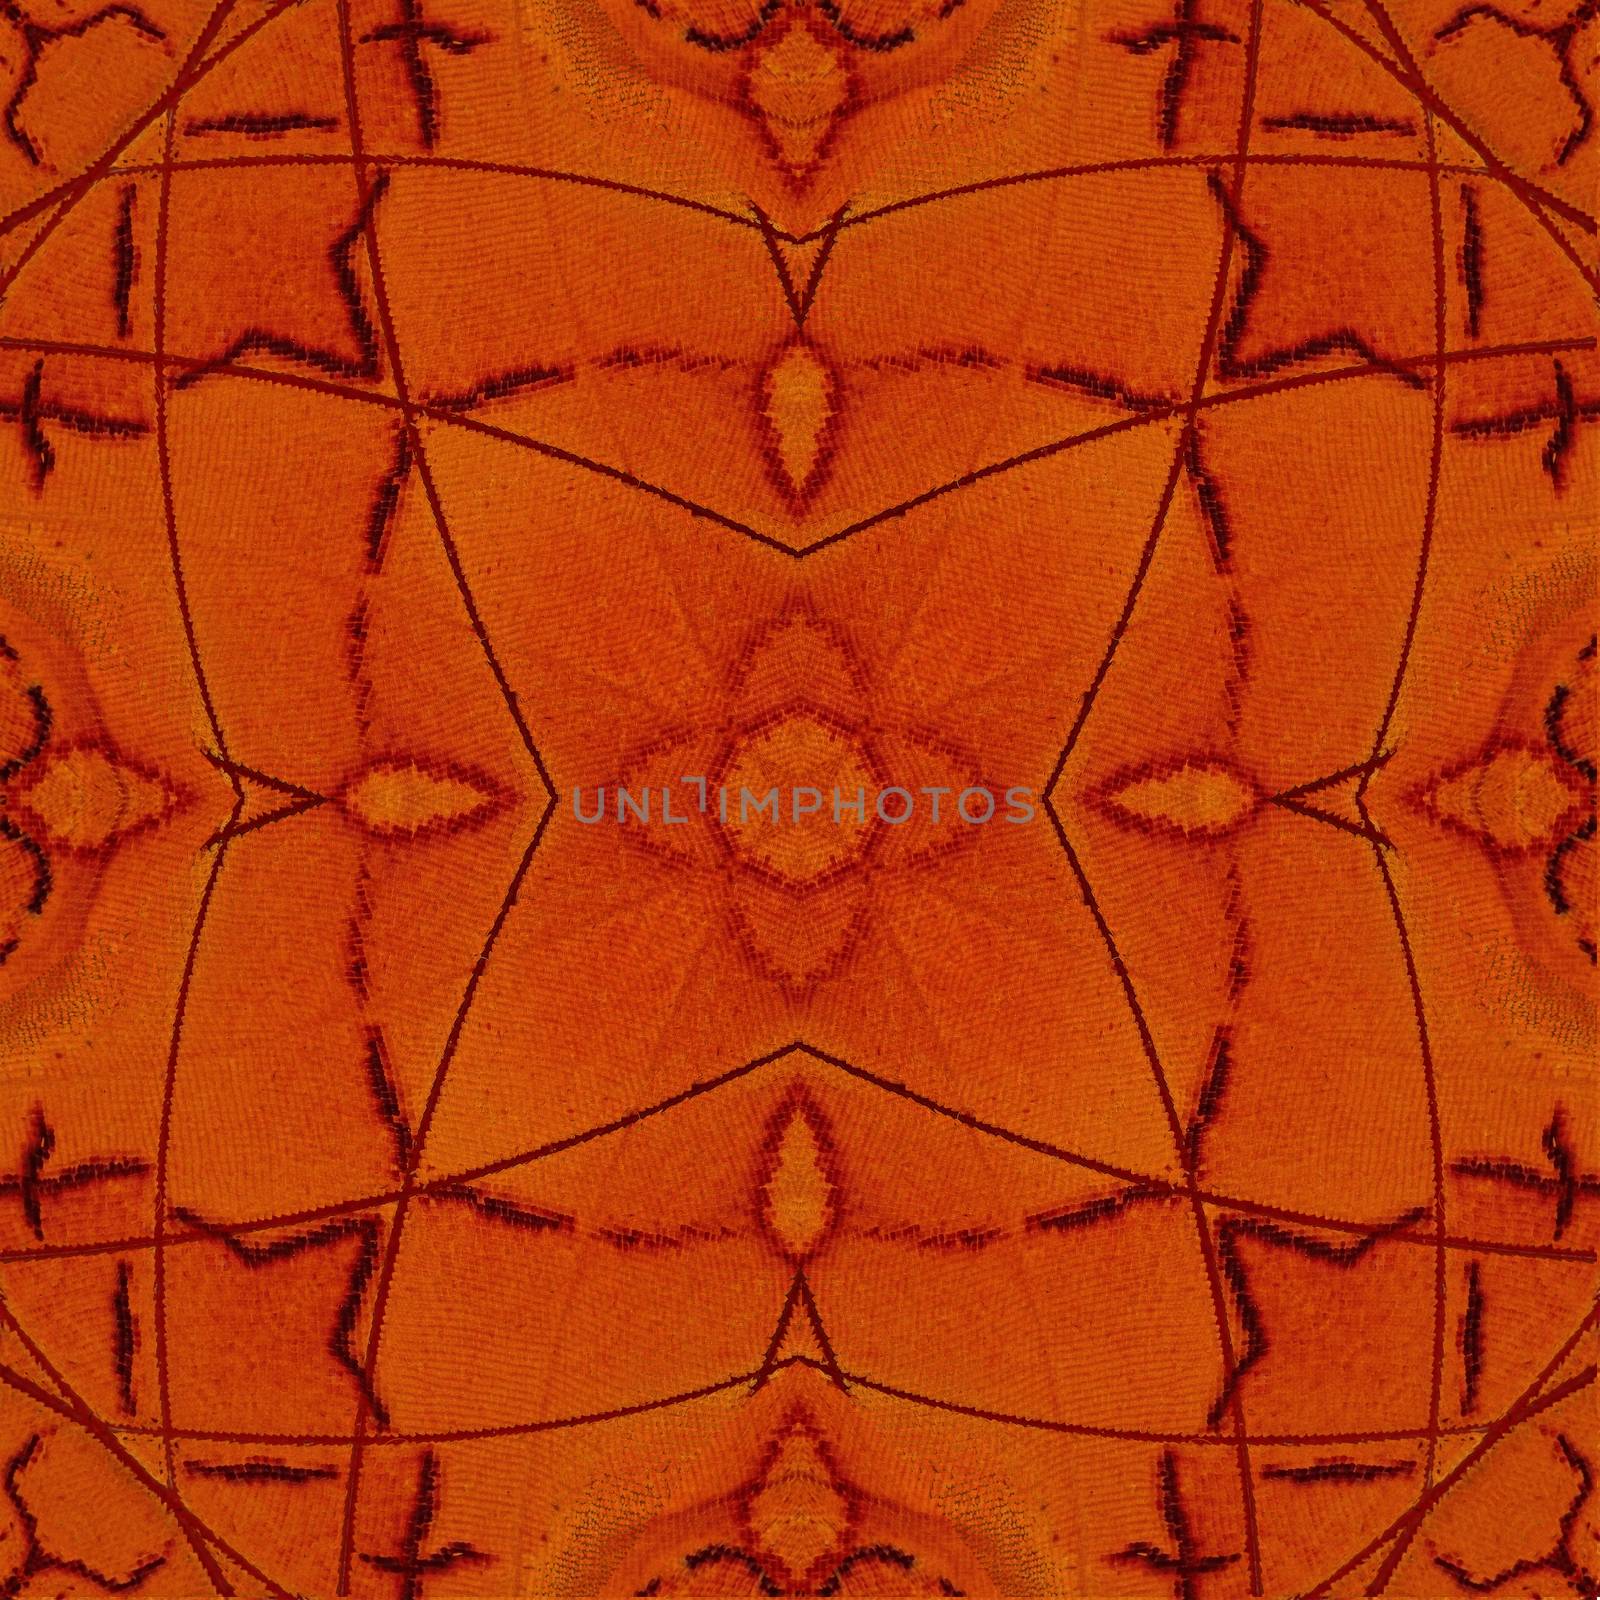 Abstract orange background texture, filler image, illustration